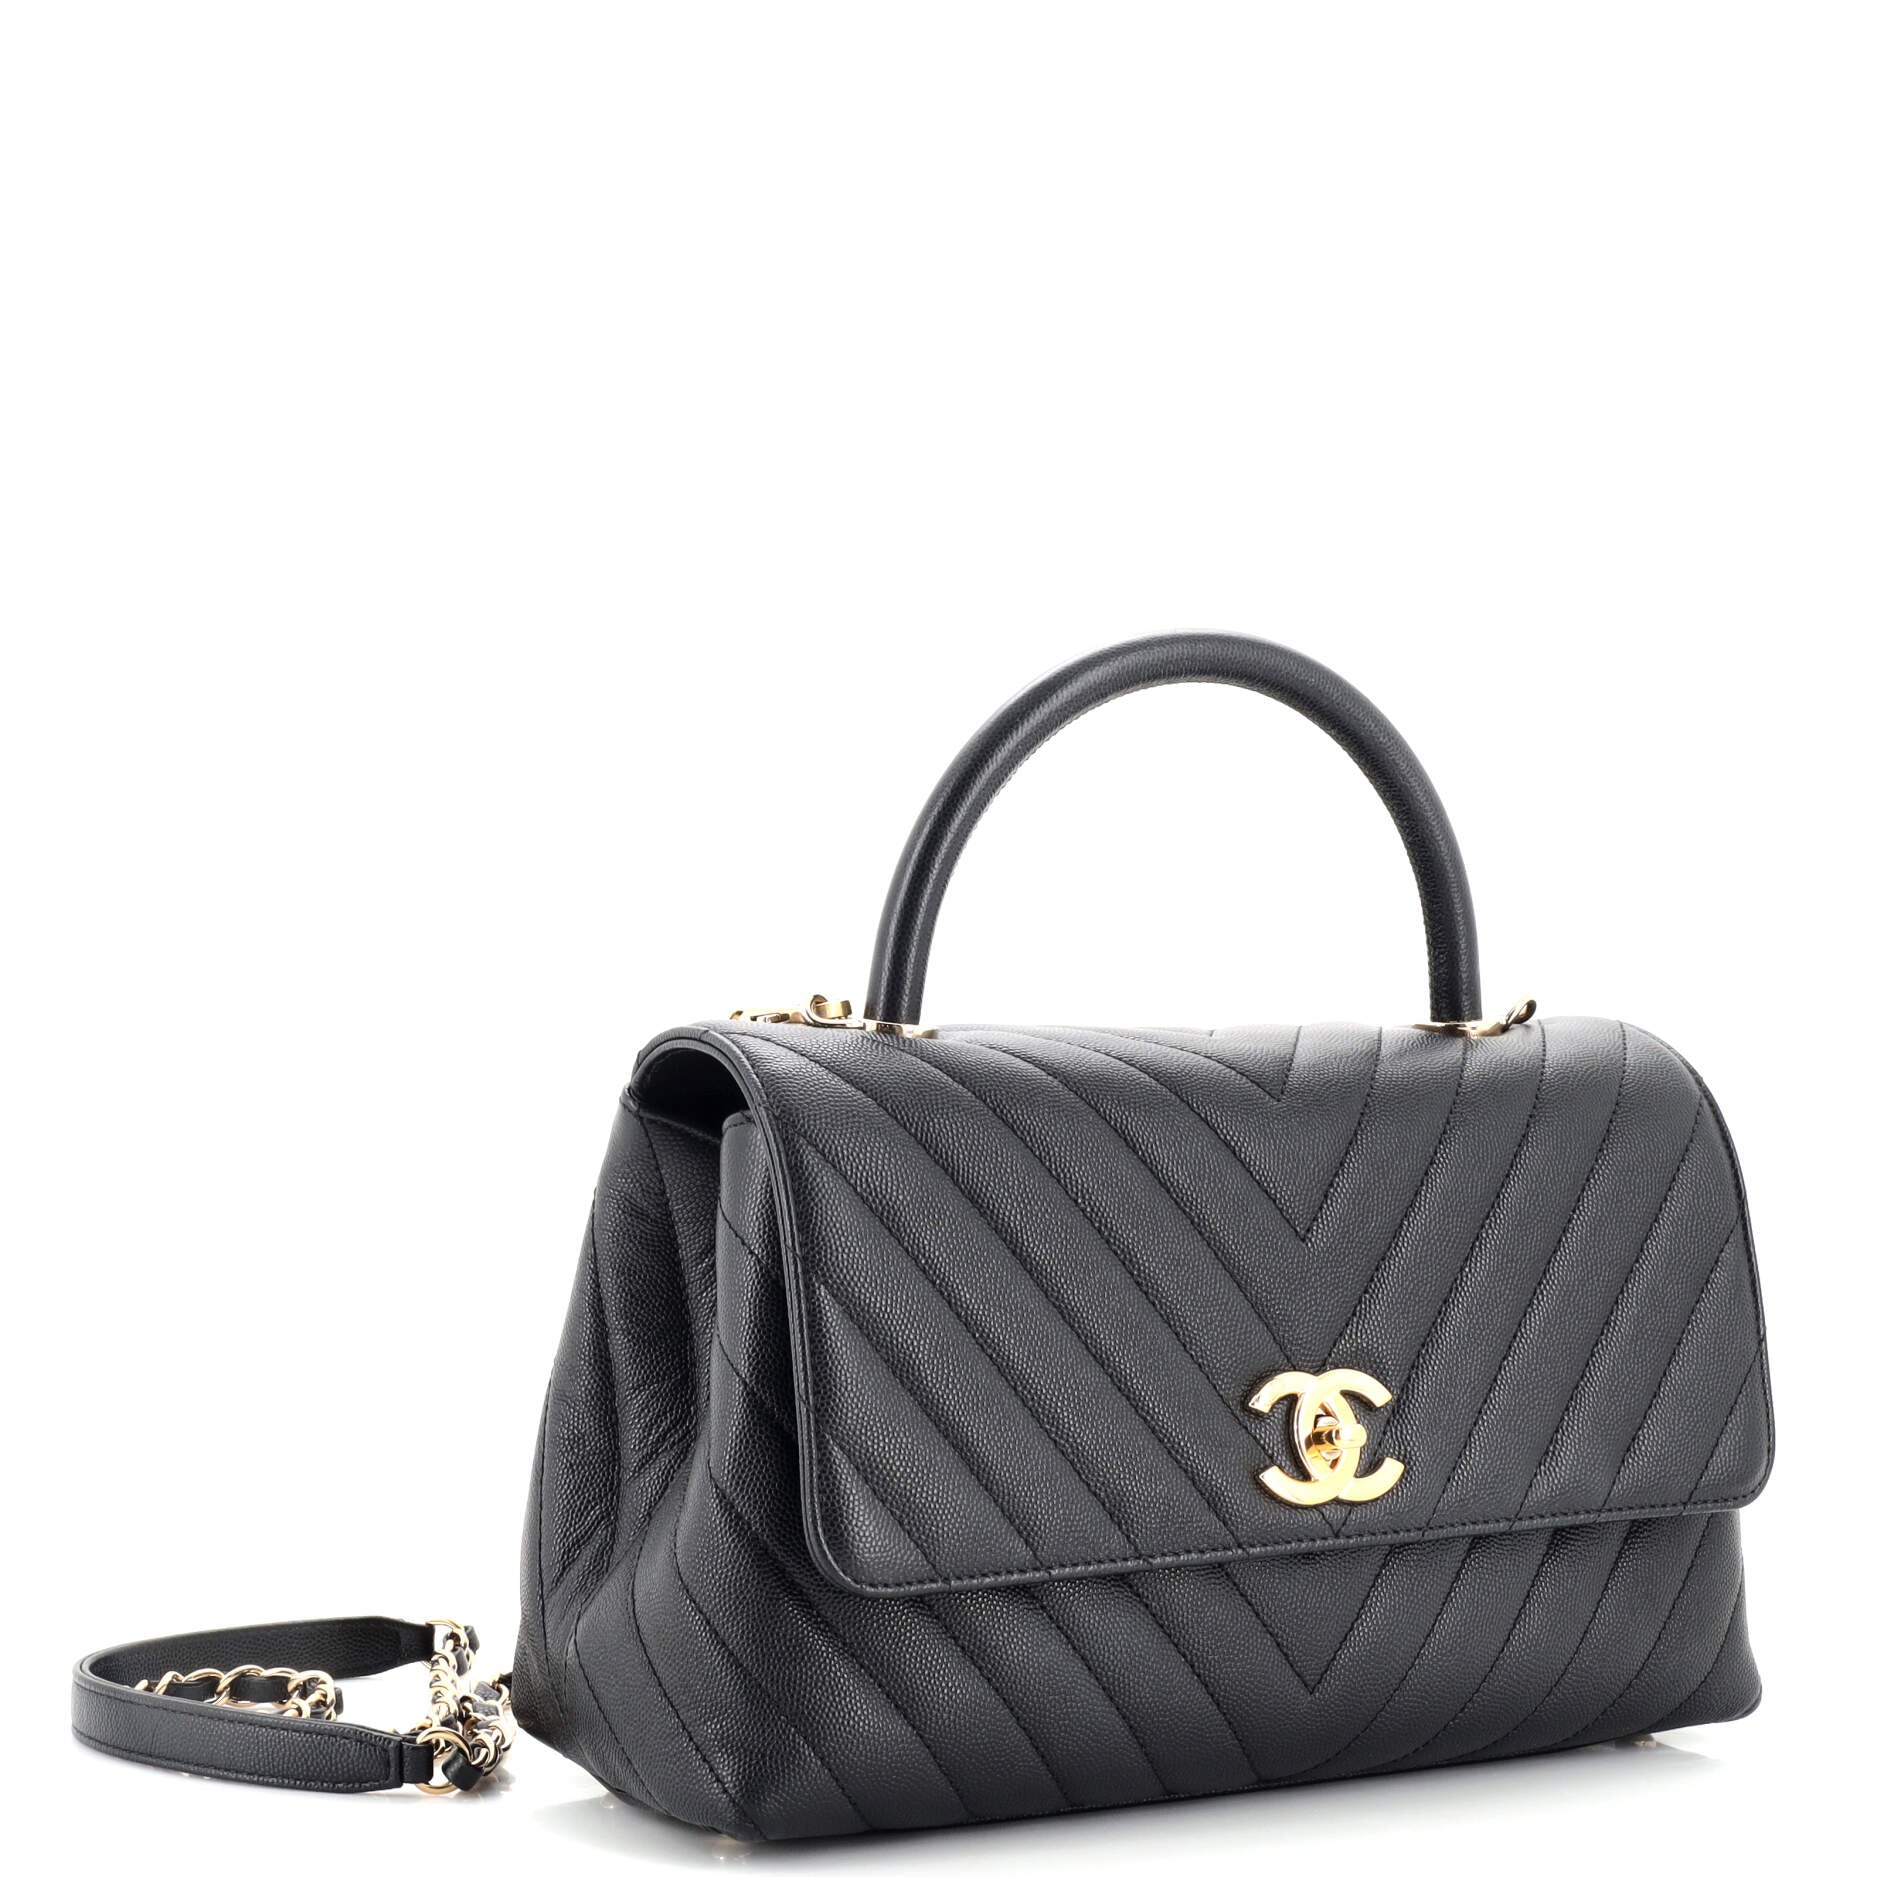 Chanel Large Coco Luxe Bag - Black Handle Bags, Handbags